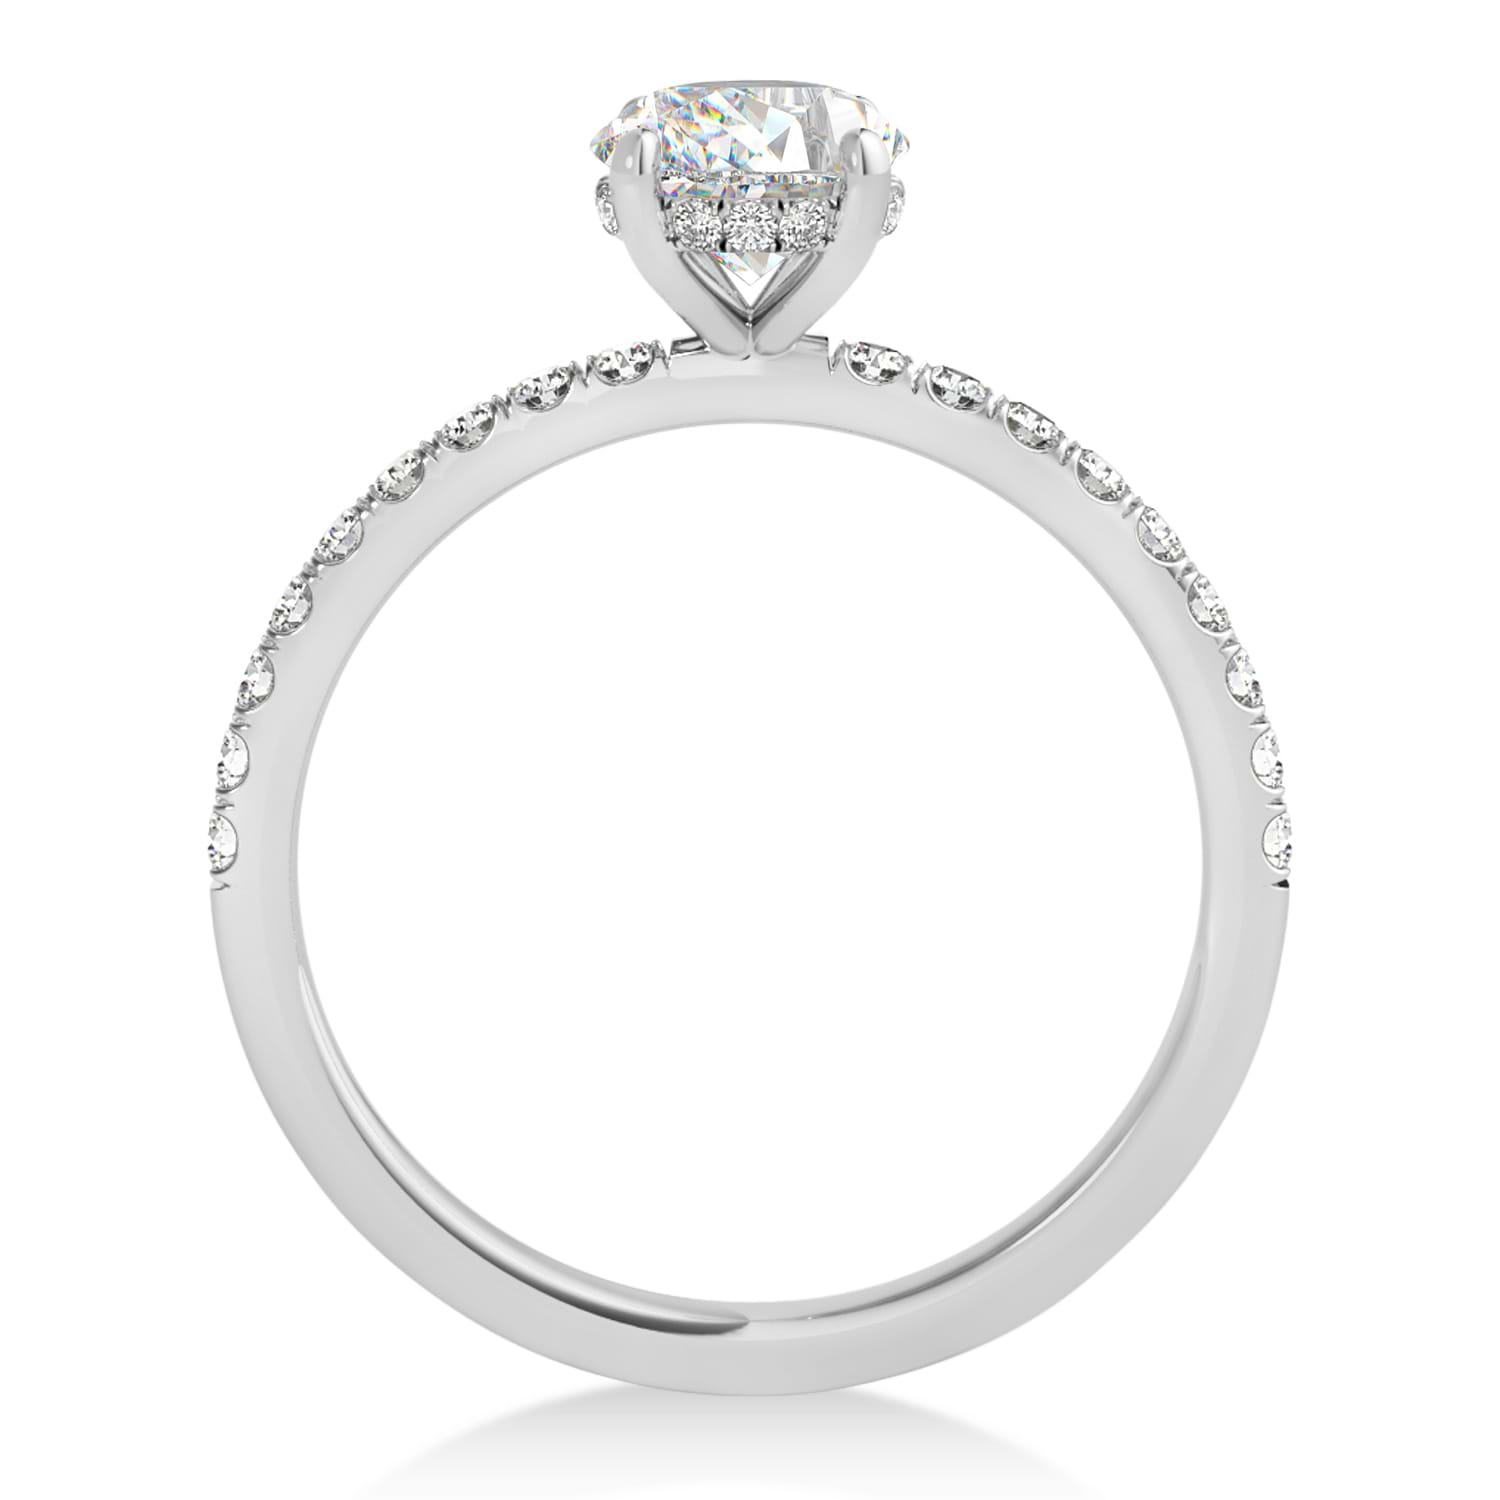 Oval Moissanite & Diamond Single Row Hidden Halo Engagement Ring Platinum (0.68ct)